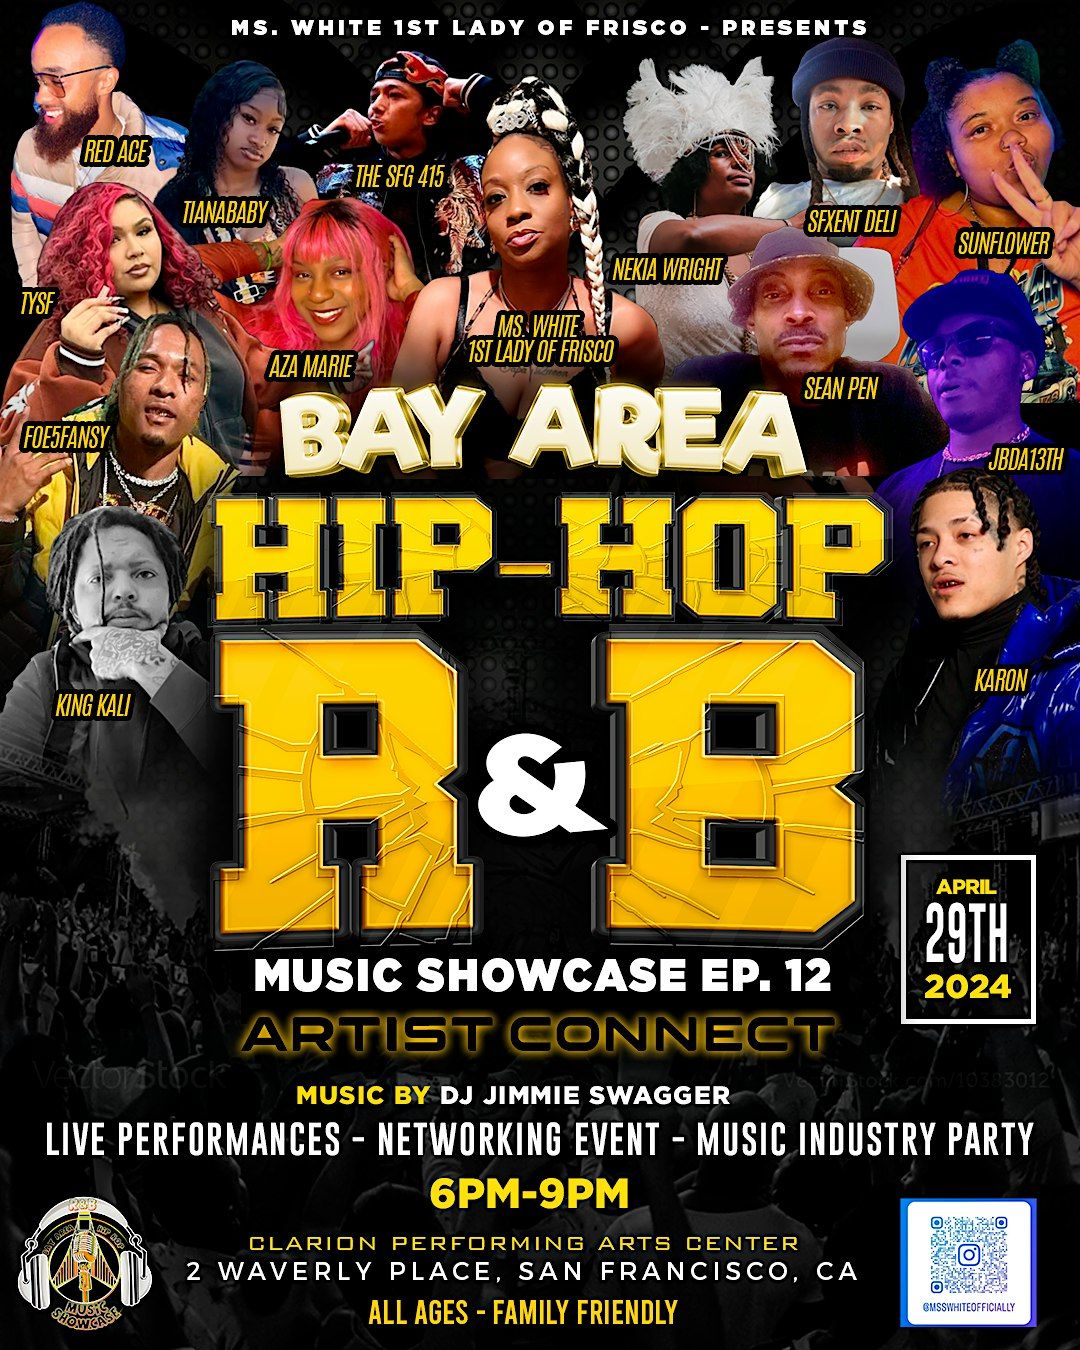 BAY AREA HIP HOP & R&B MUSIC SHOWCASE EP. 12 - ARTIST CONNECT